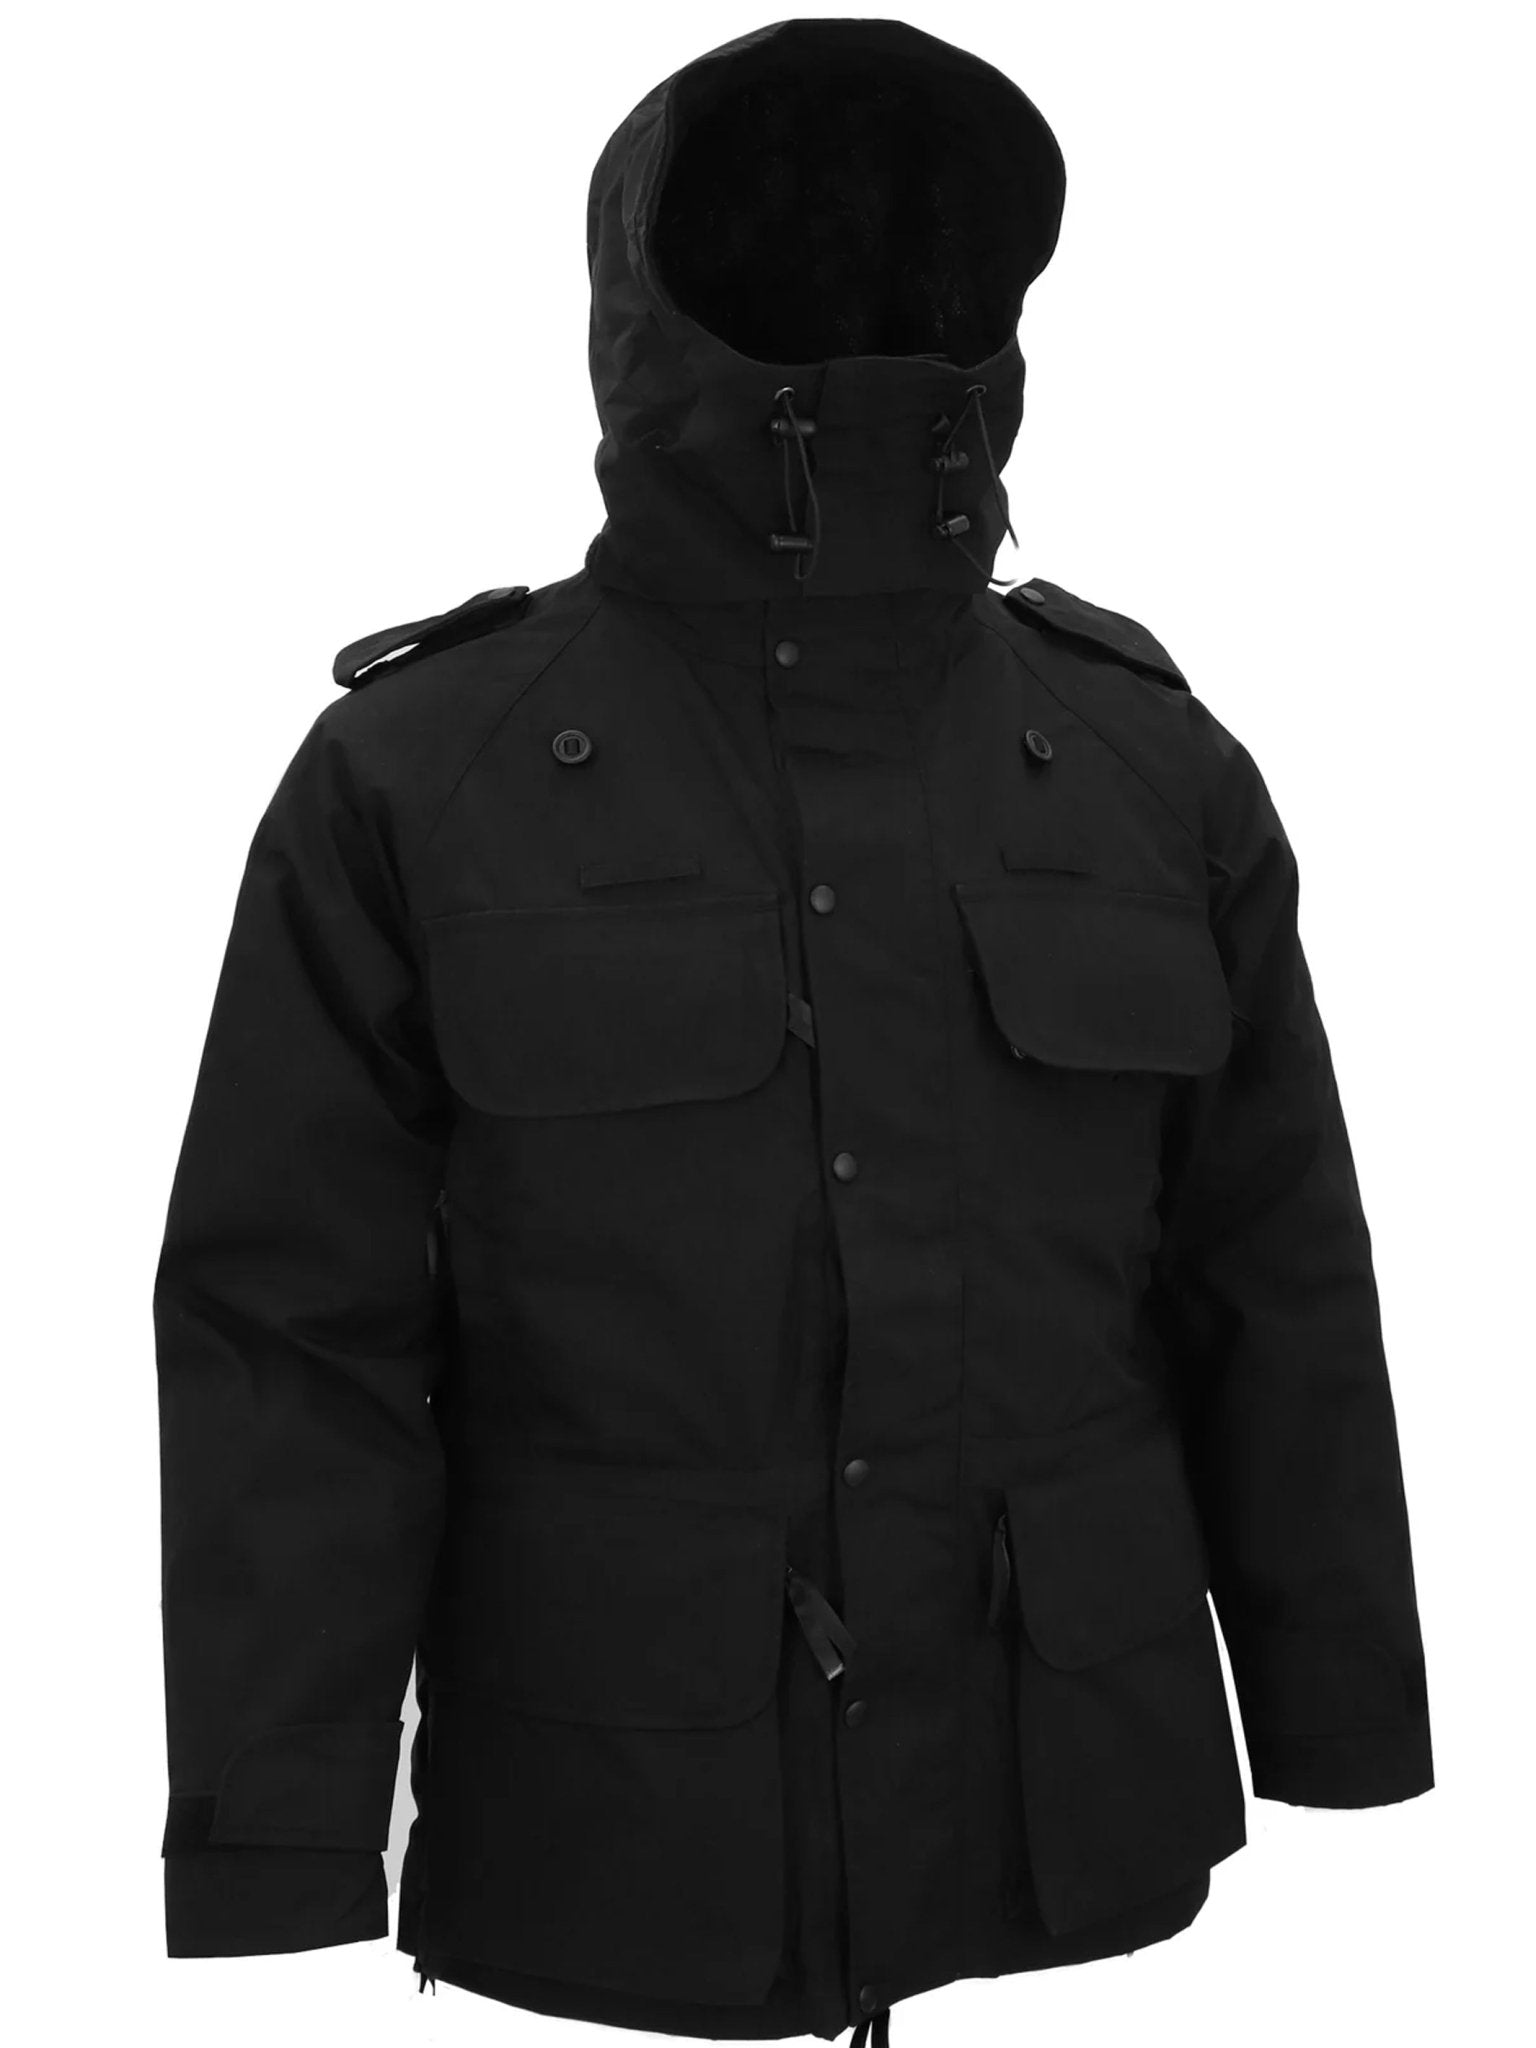 4elementsclothingArktisArktis - B315 Avenger Waterproof, Breathable Coat / Jacket - Ripstop& Detachable FleeceOuterwearB315-XS-BK